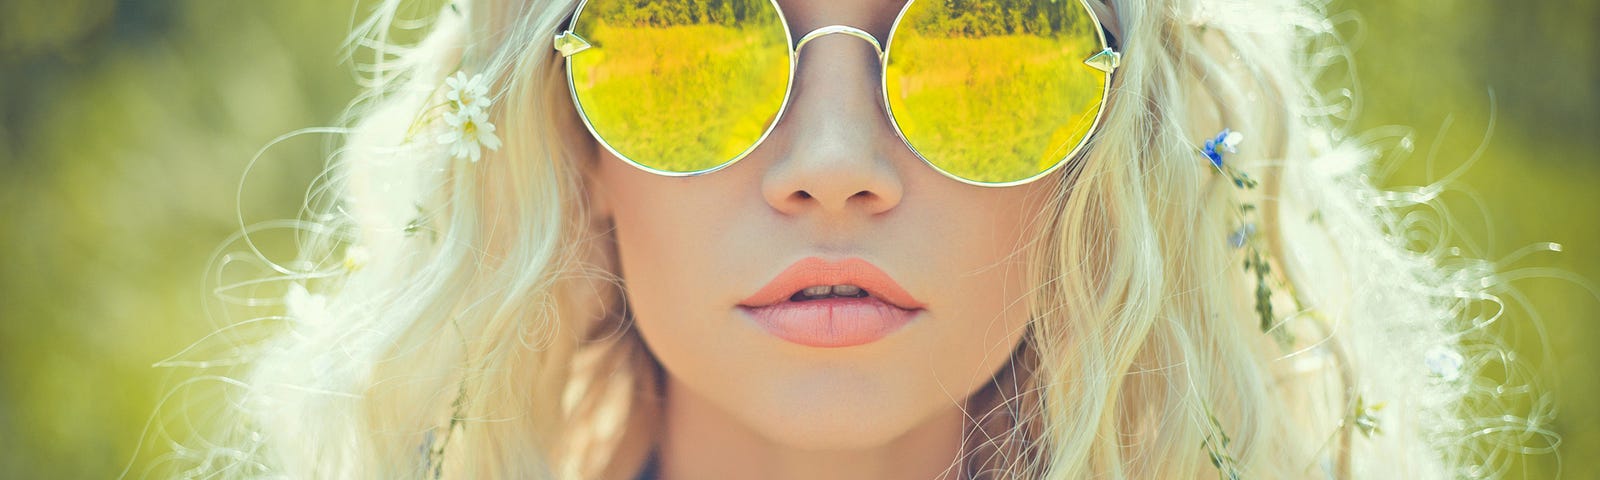 Girl in sunshine with bright yellow round sunglasses